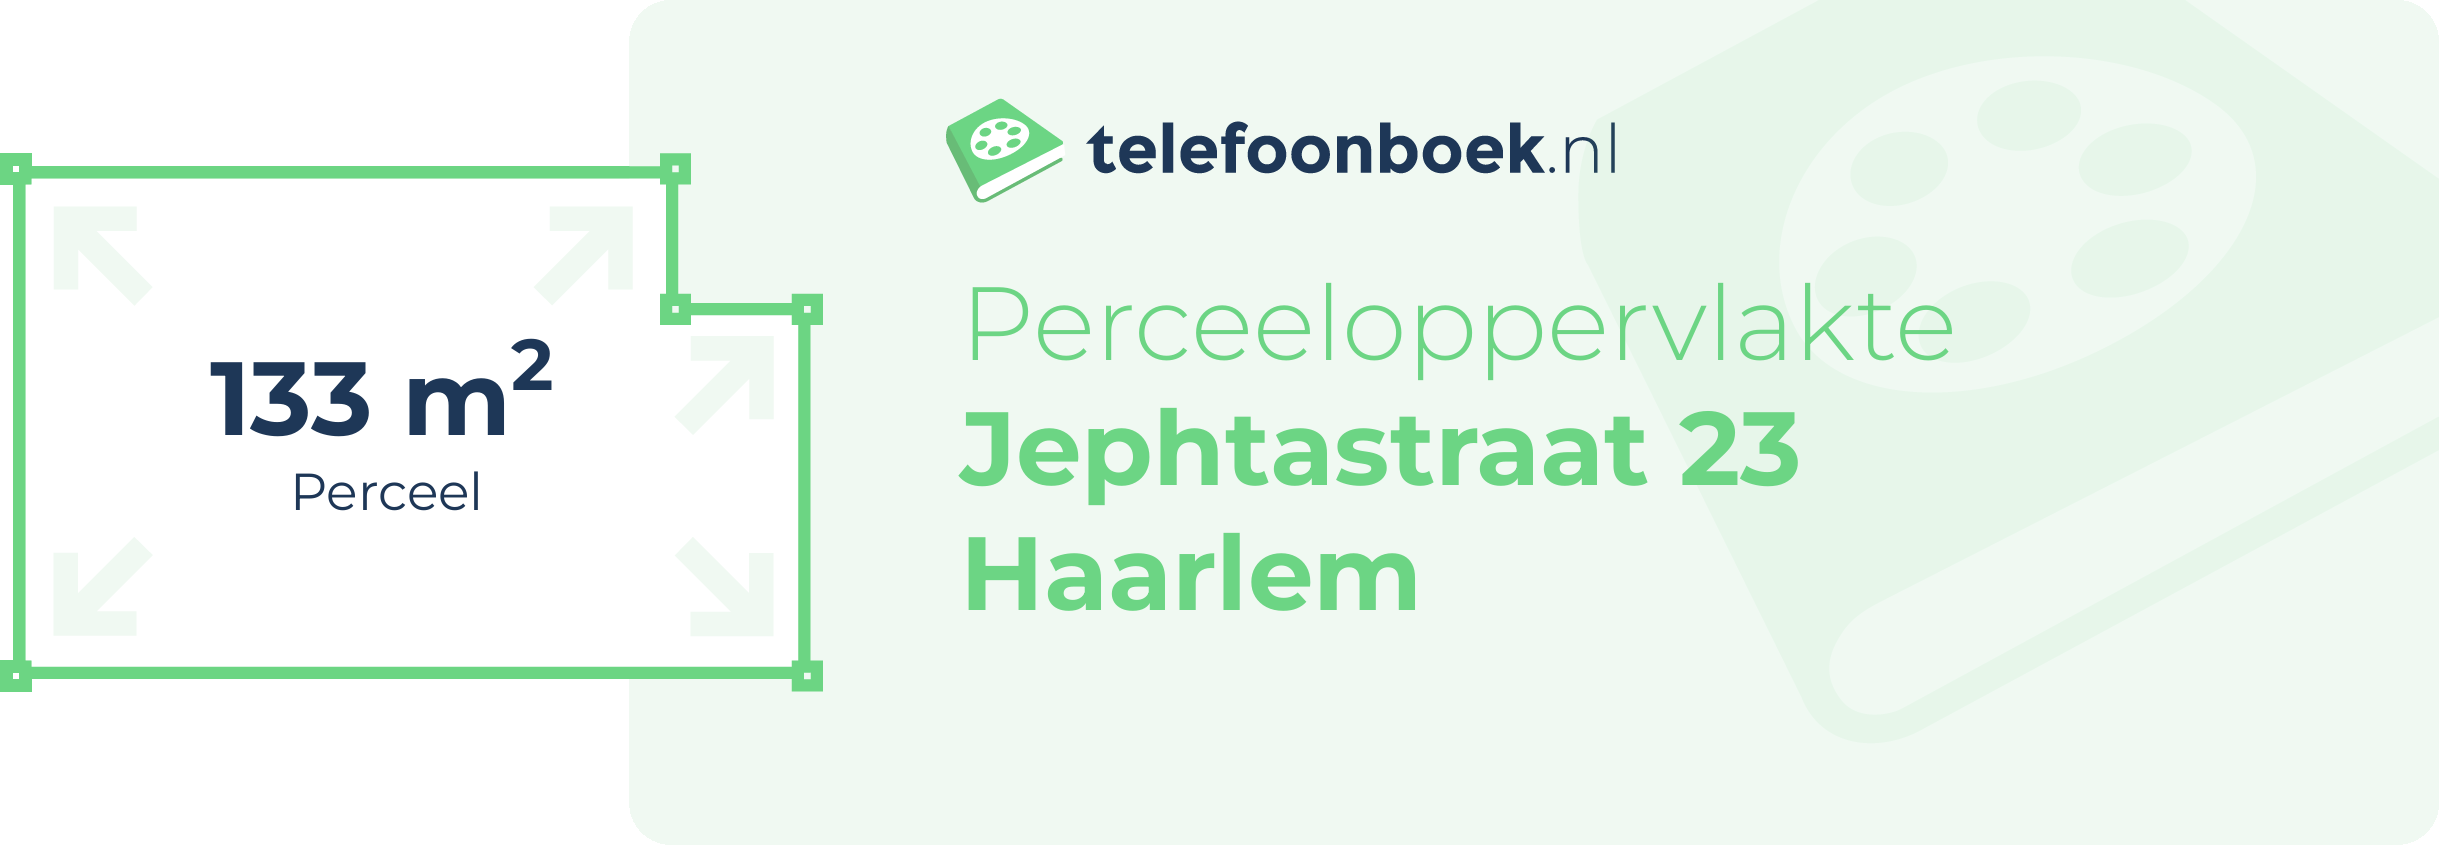 Perceeloppervlakte Jephtastraat 23 Haarlem